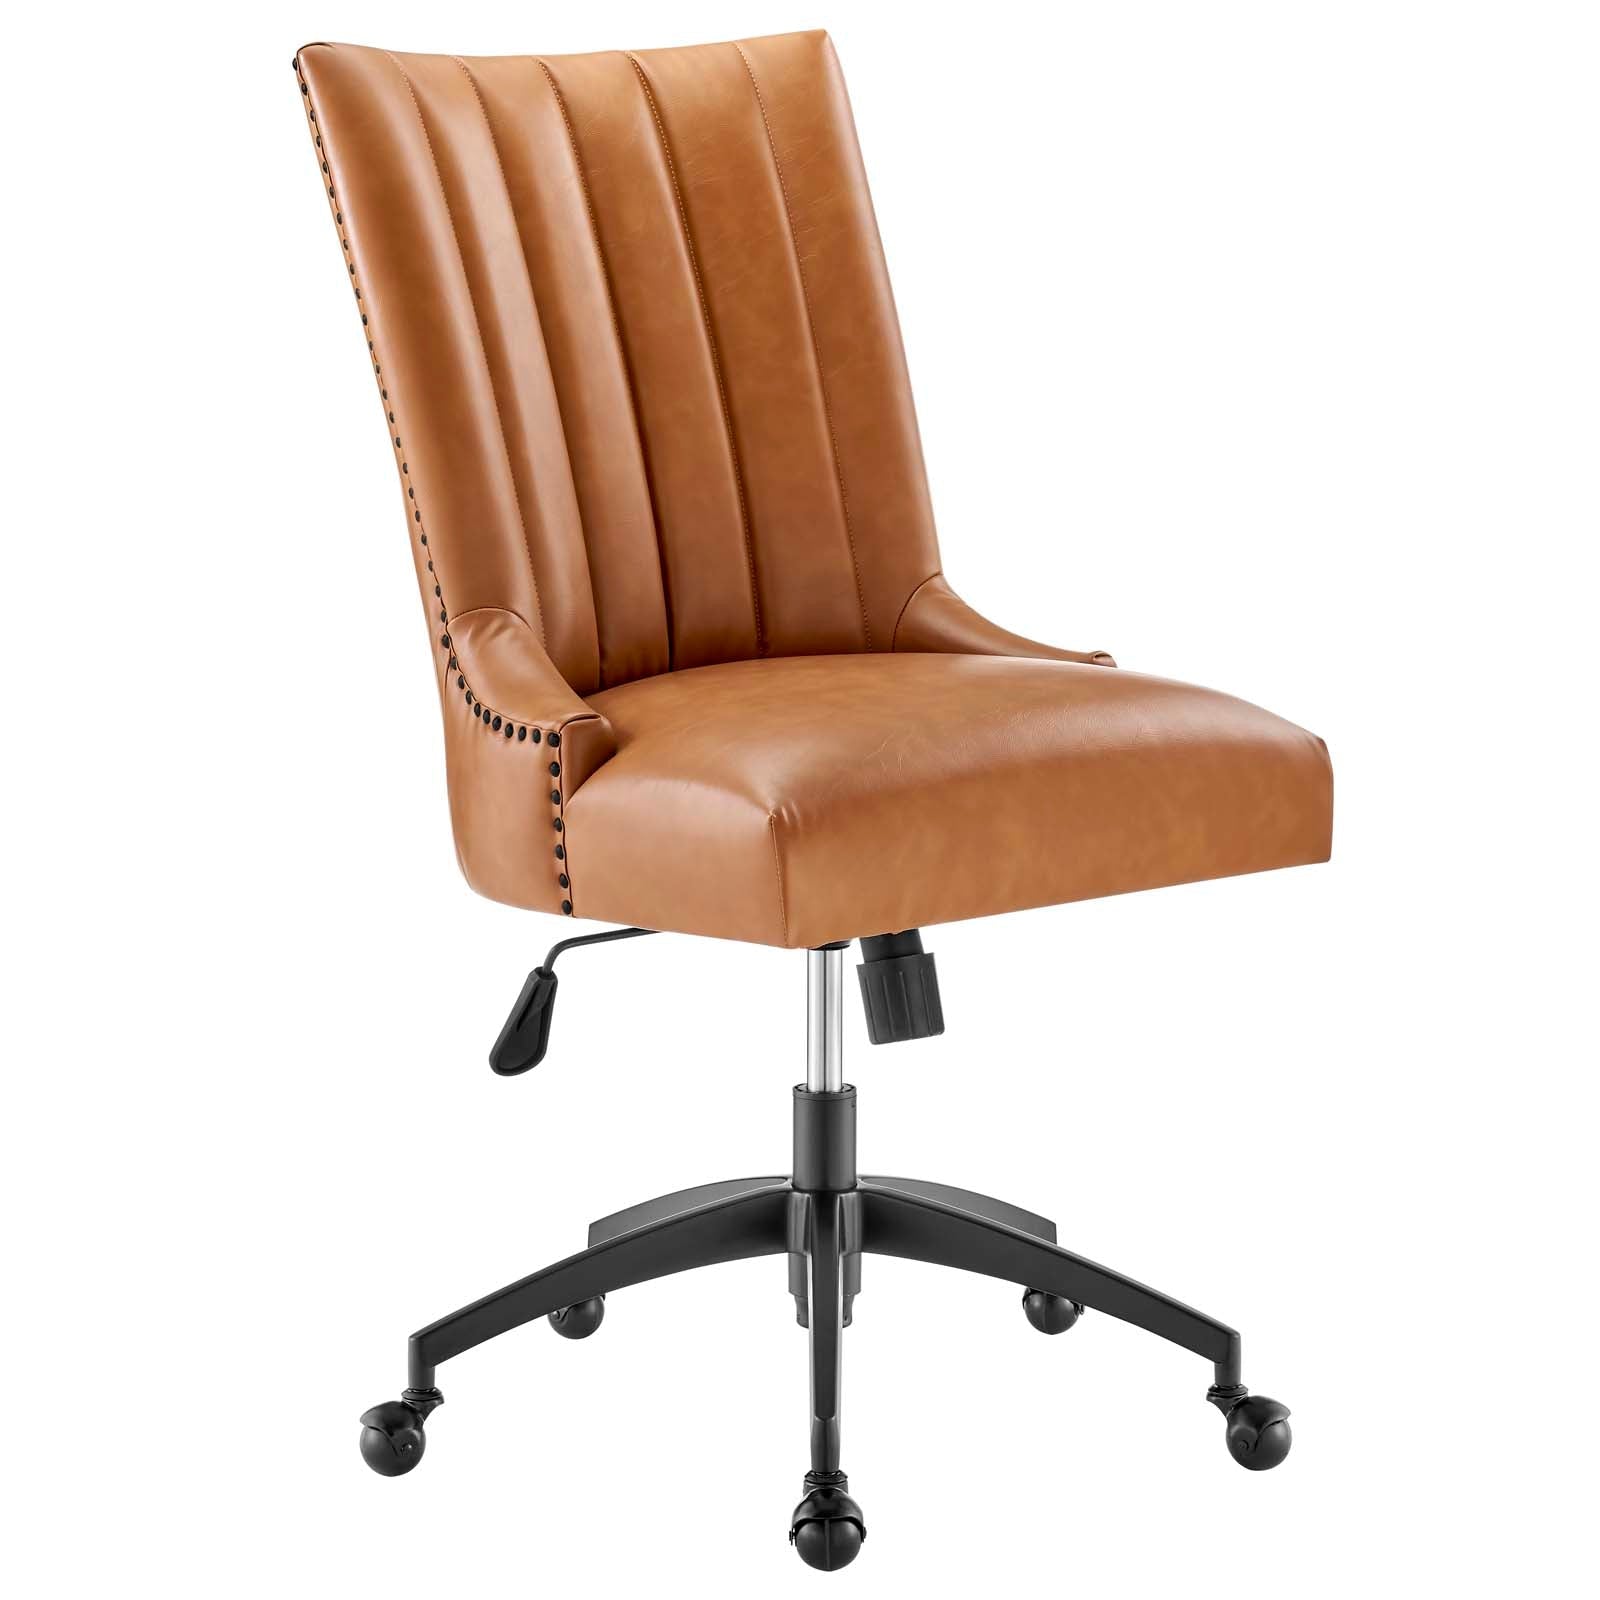 Baldwin Tufted Vegan Leather Office Chair